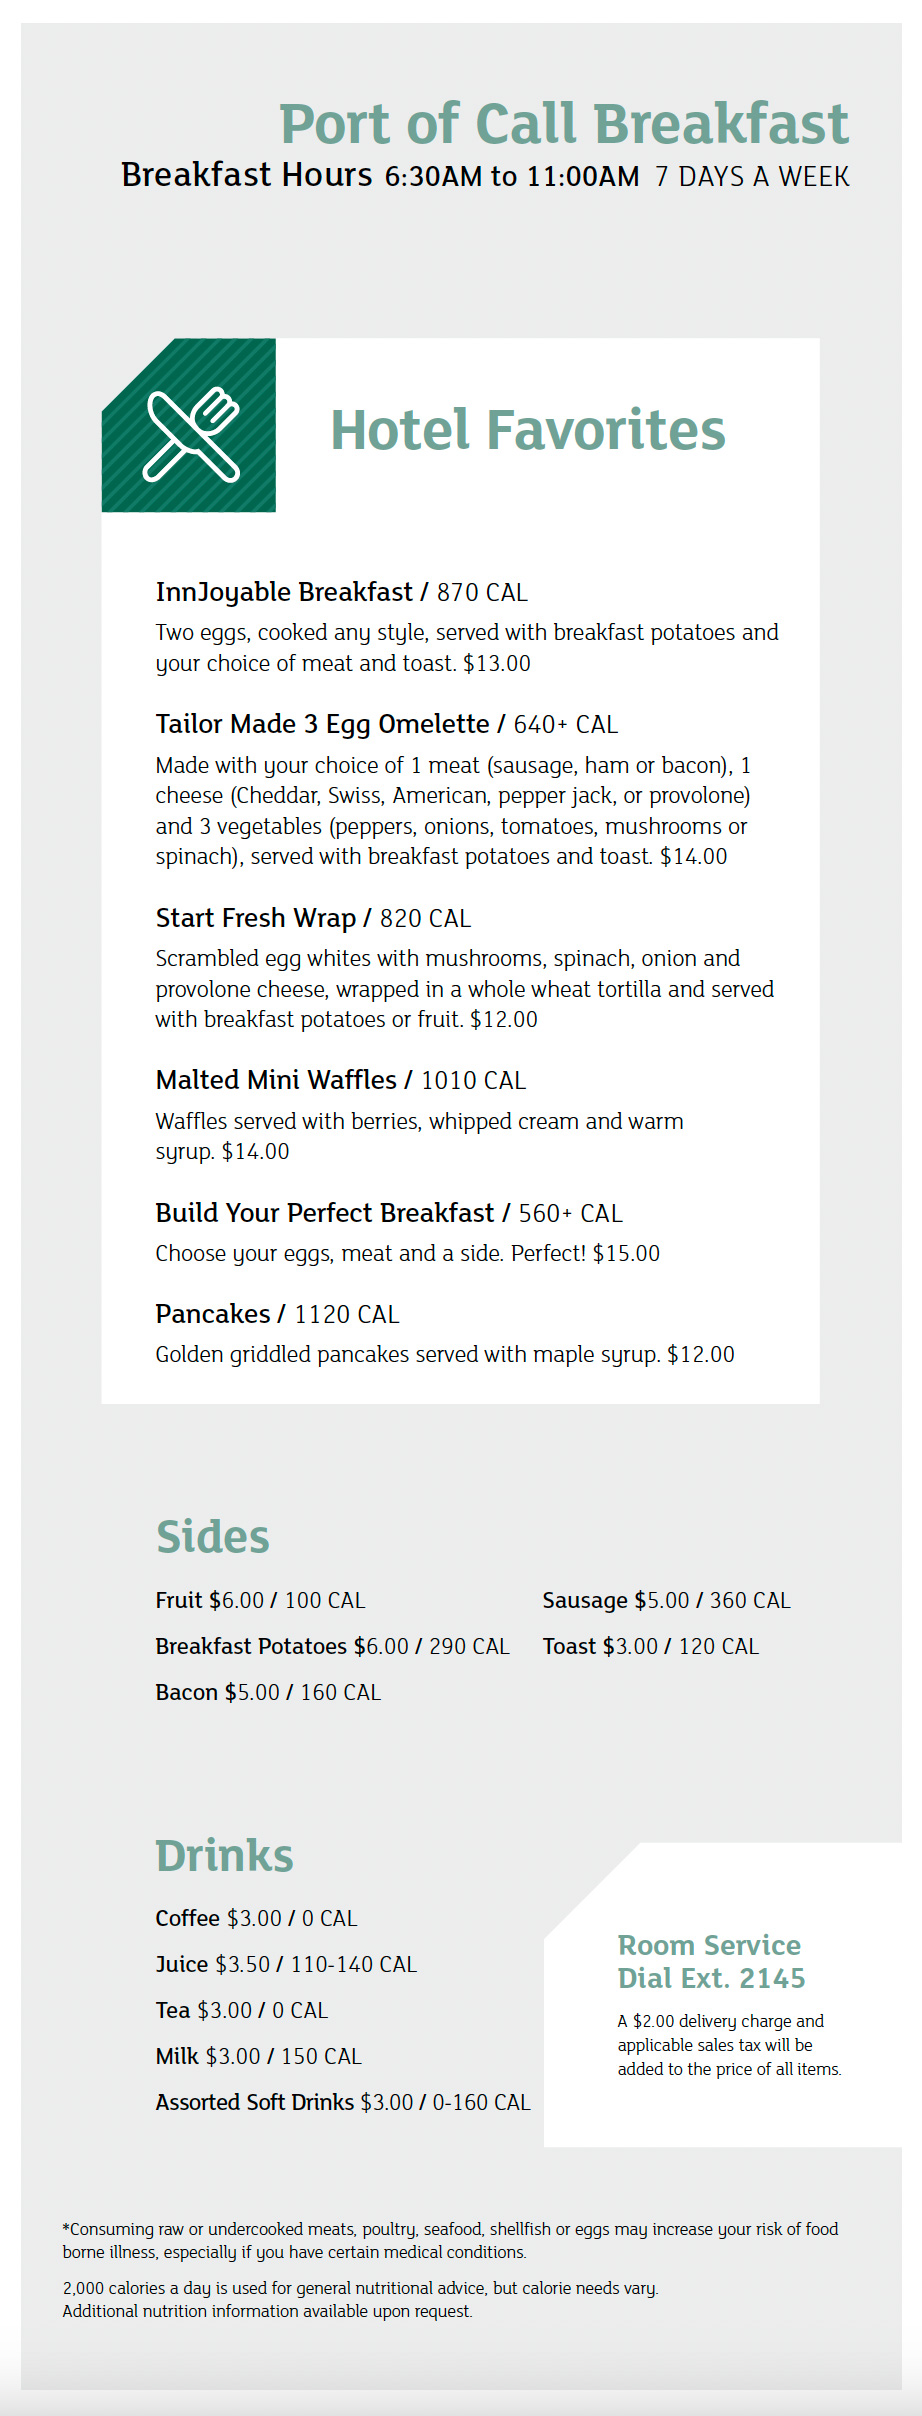 port of call breakfast menu updated december 